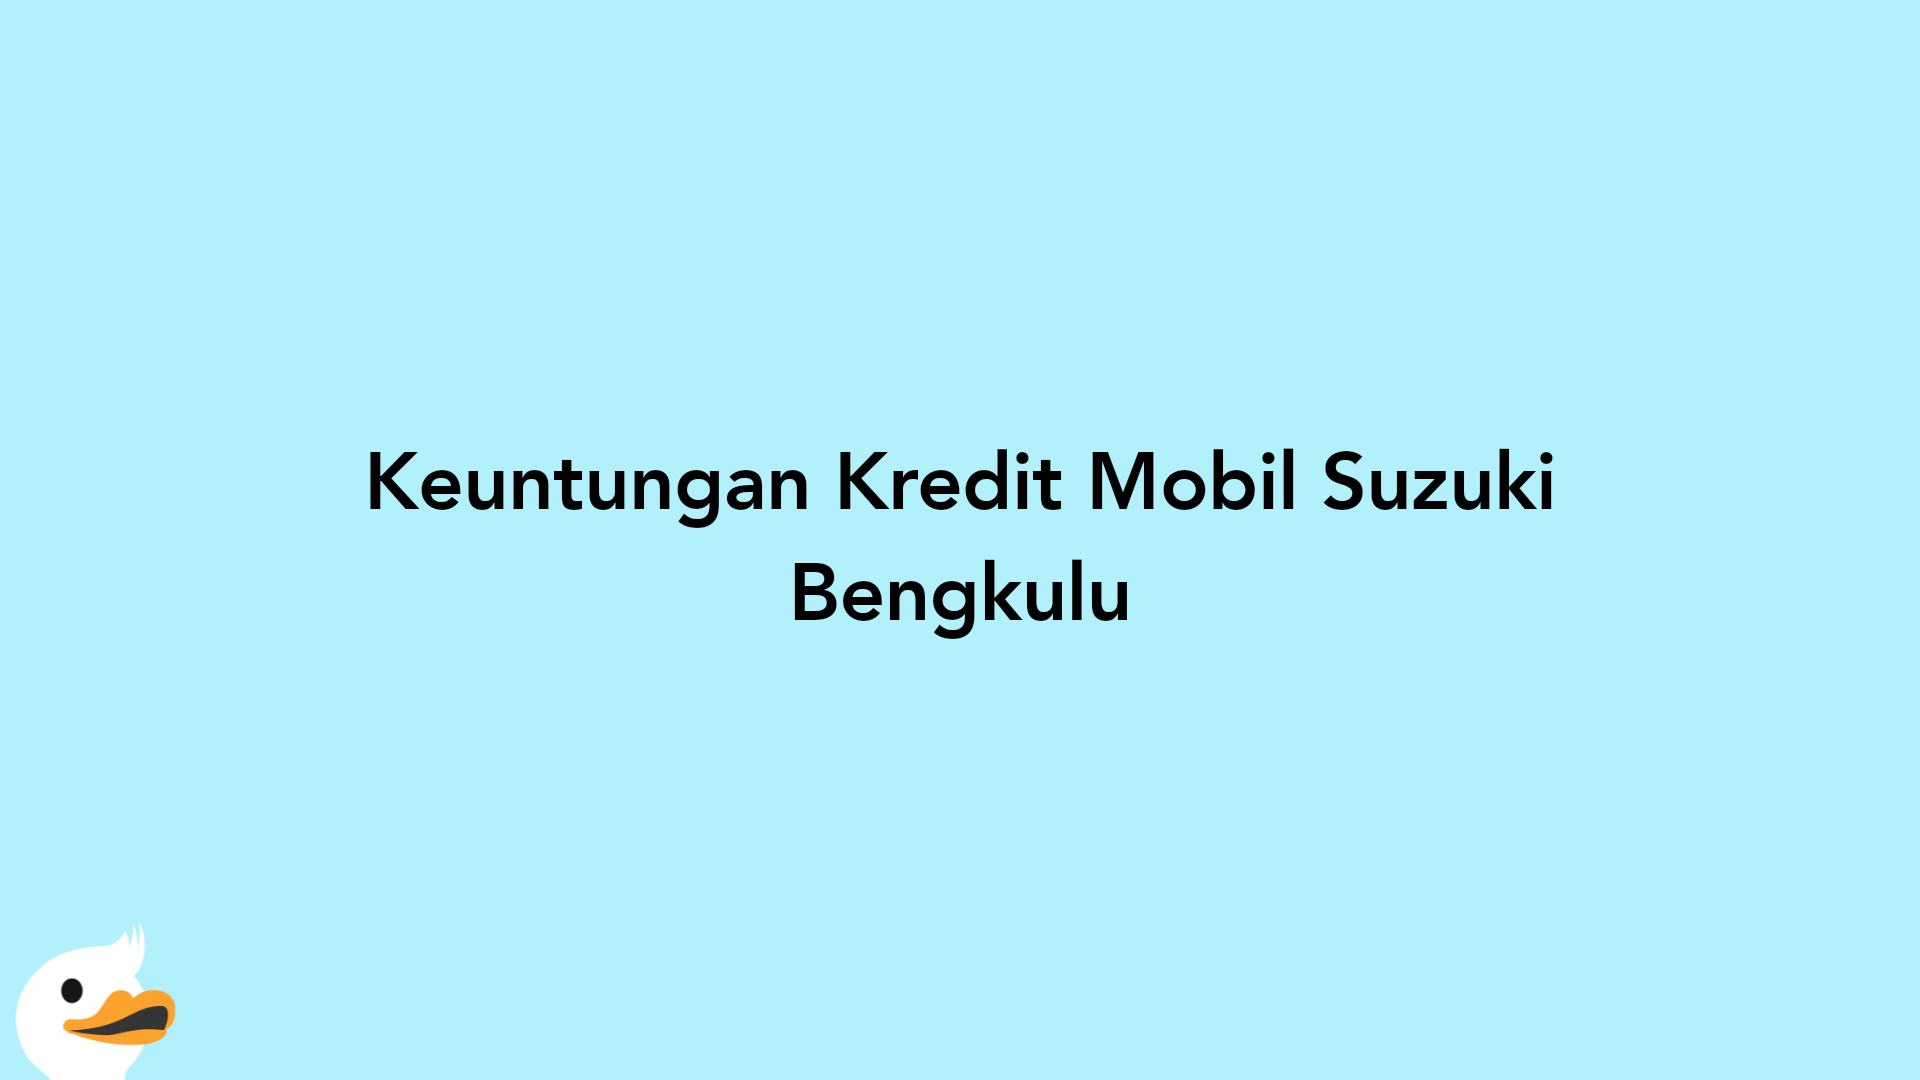 Keuntungan Kredit Mobil Suzuki Bengkulu